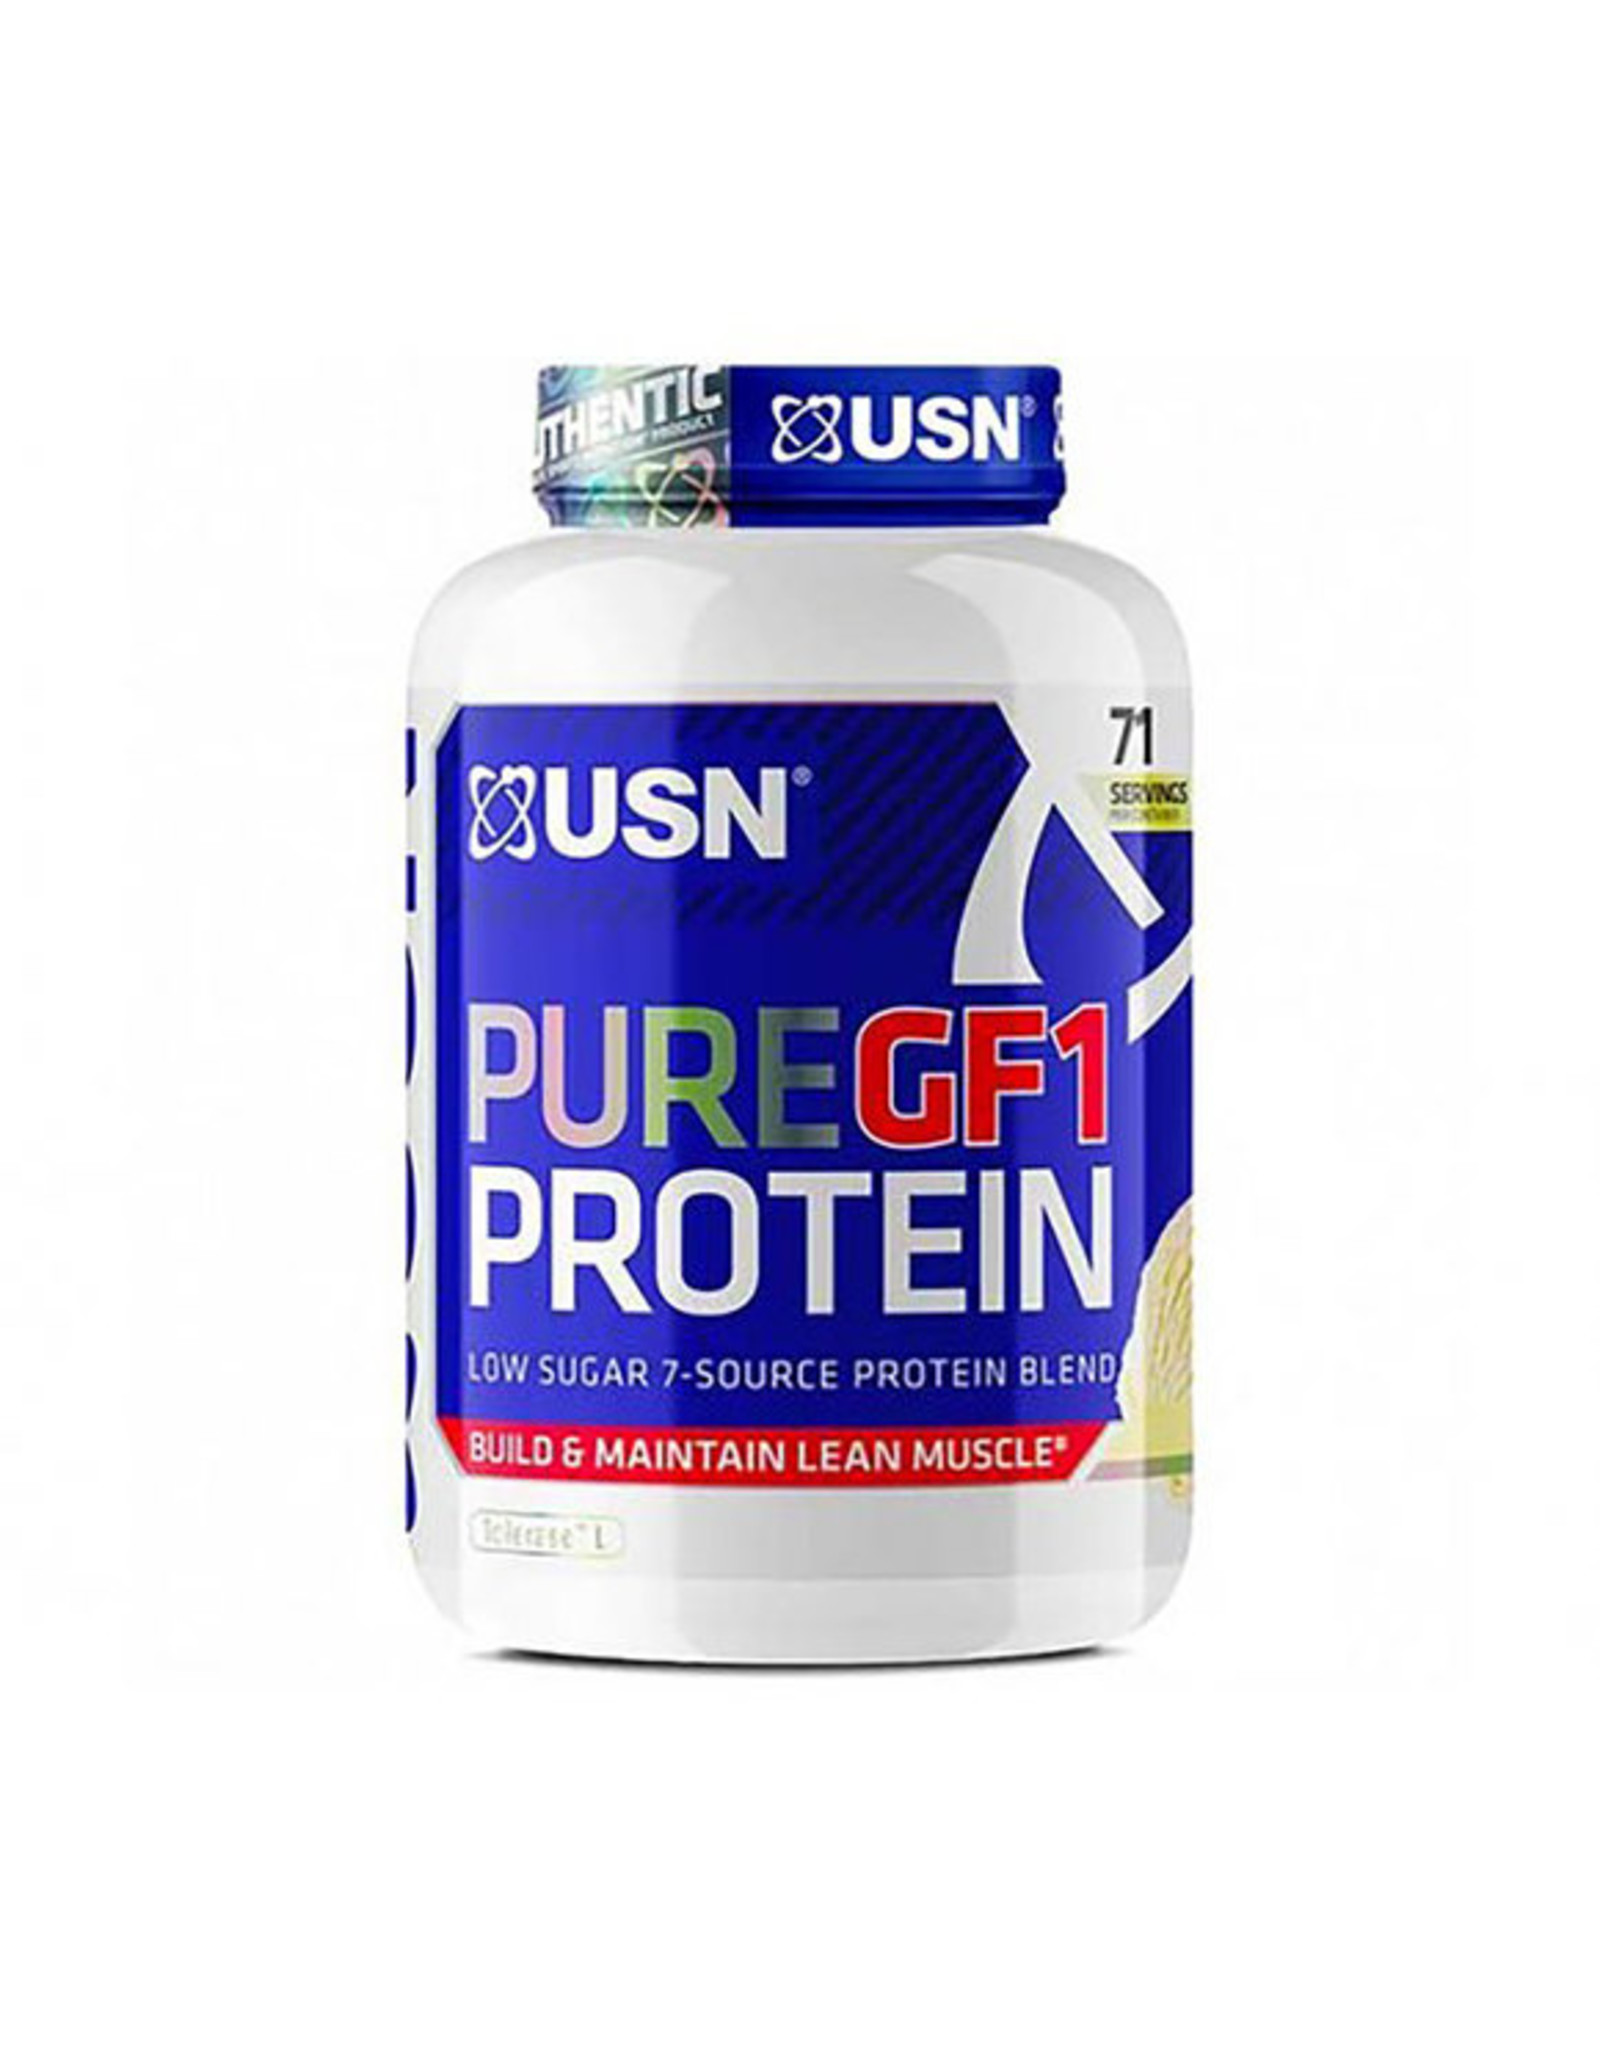 USN Pure USN GF1 Protein